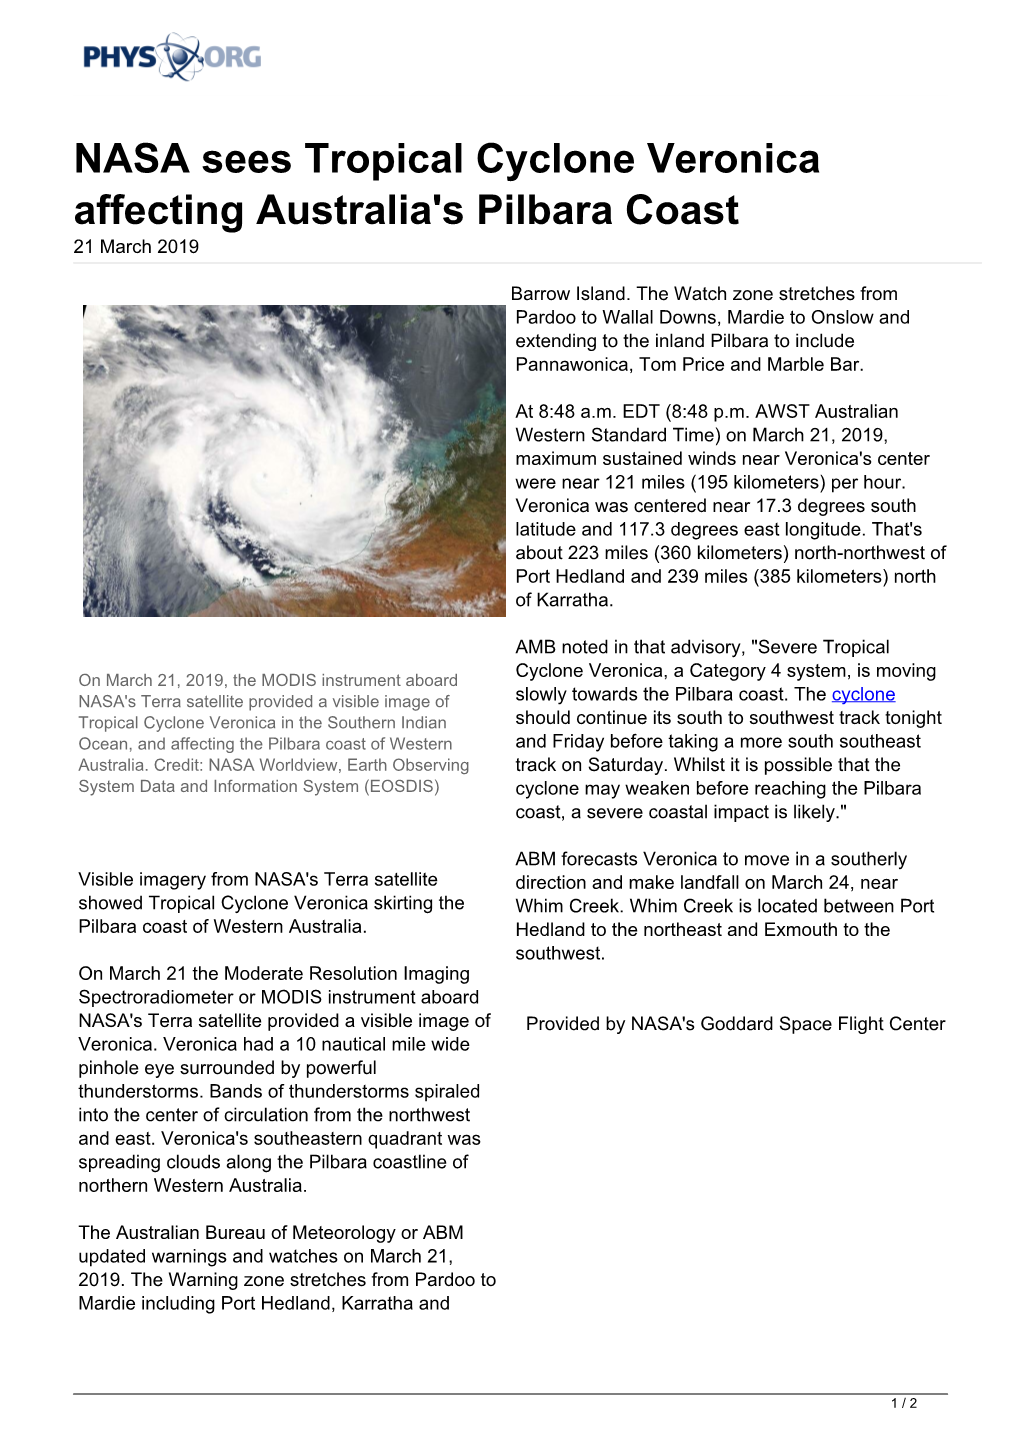 NASA Sees Tropical Cyclone Veronica Affecting Australia's Pilbara Coast 21 March 2019